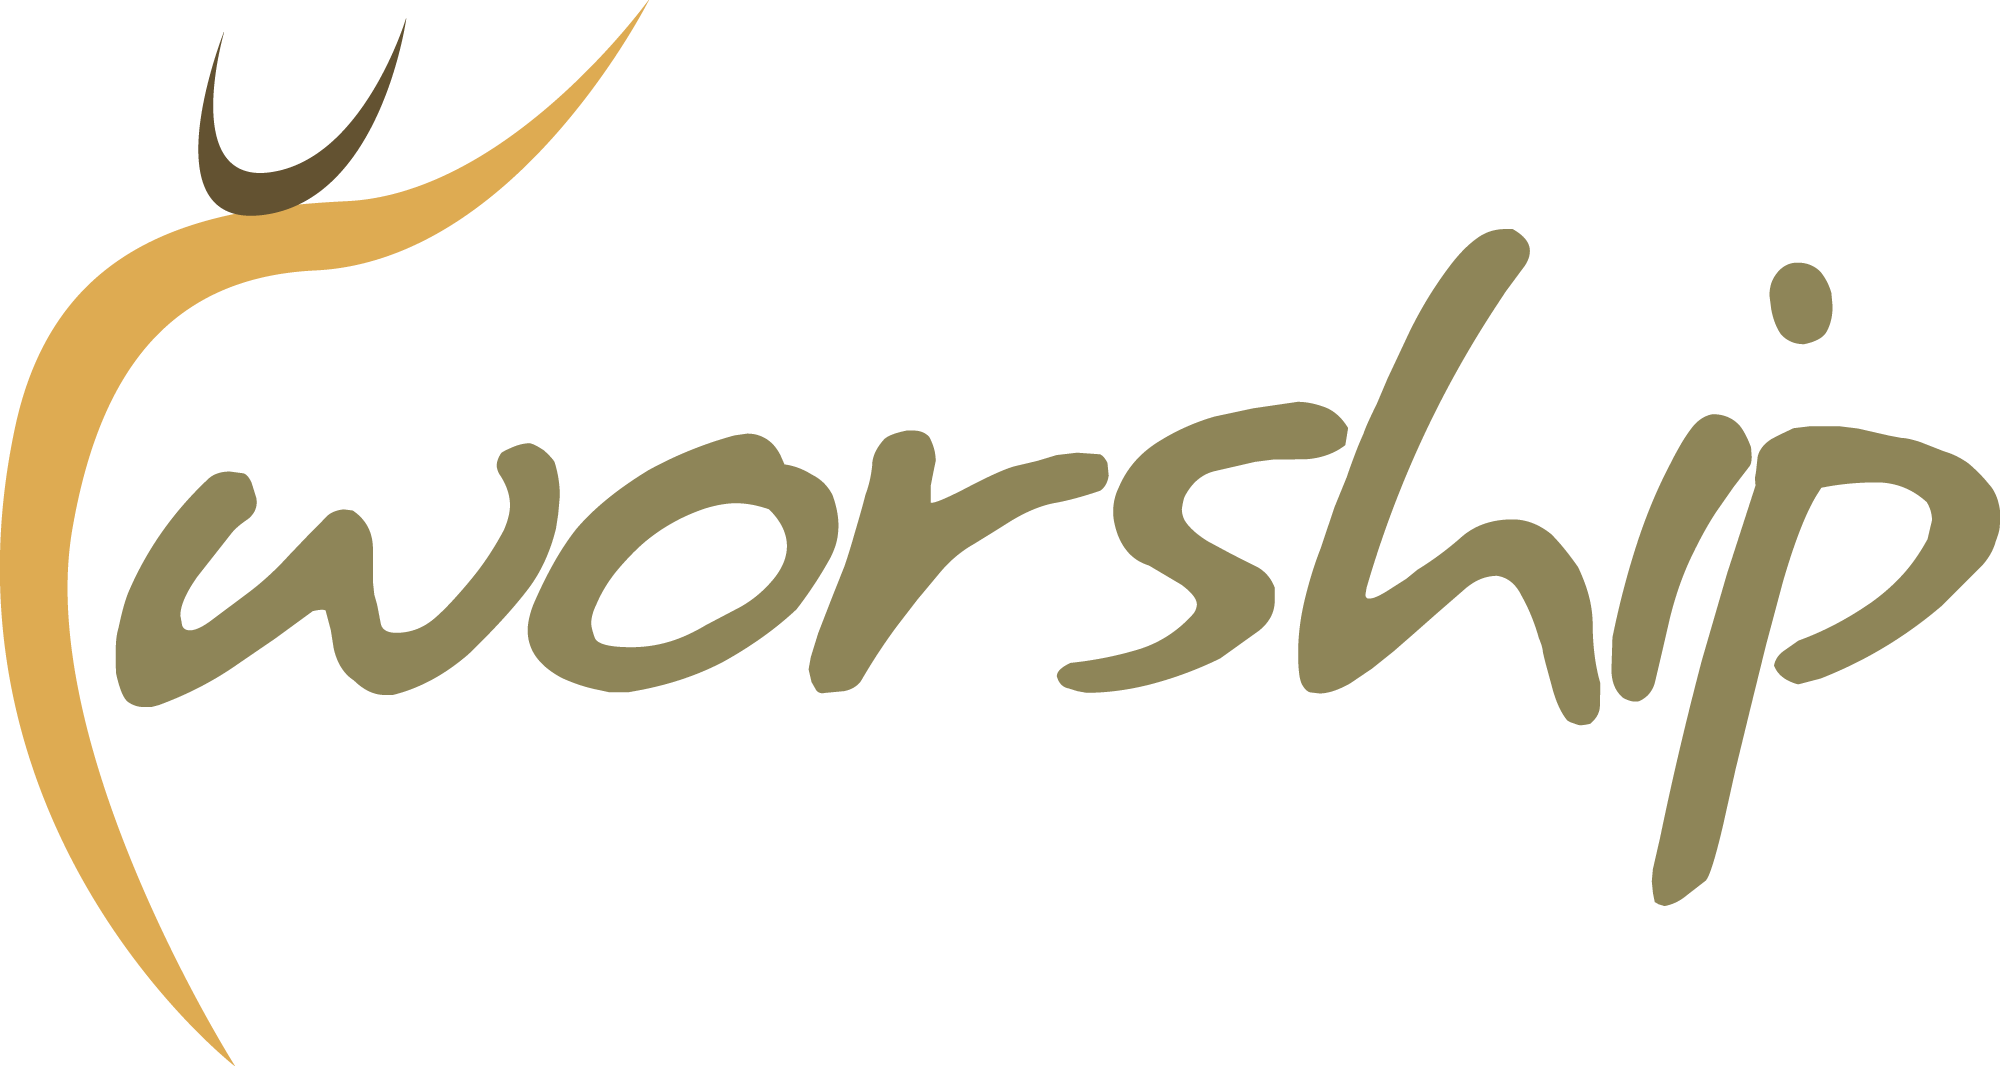 Praise and worship.